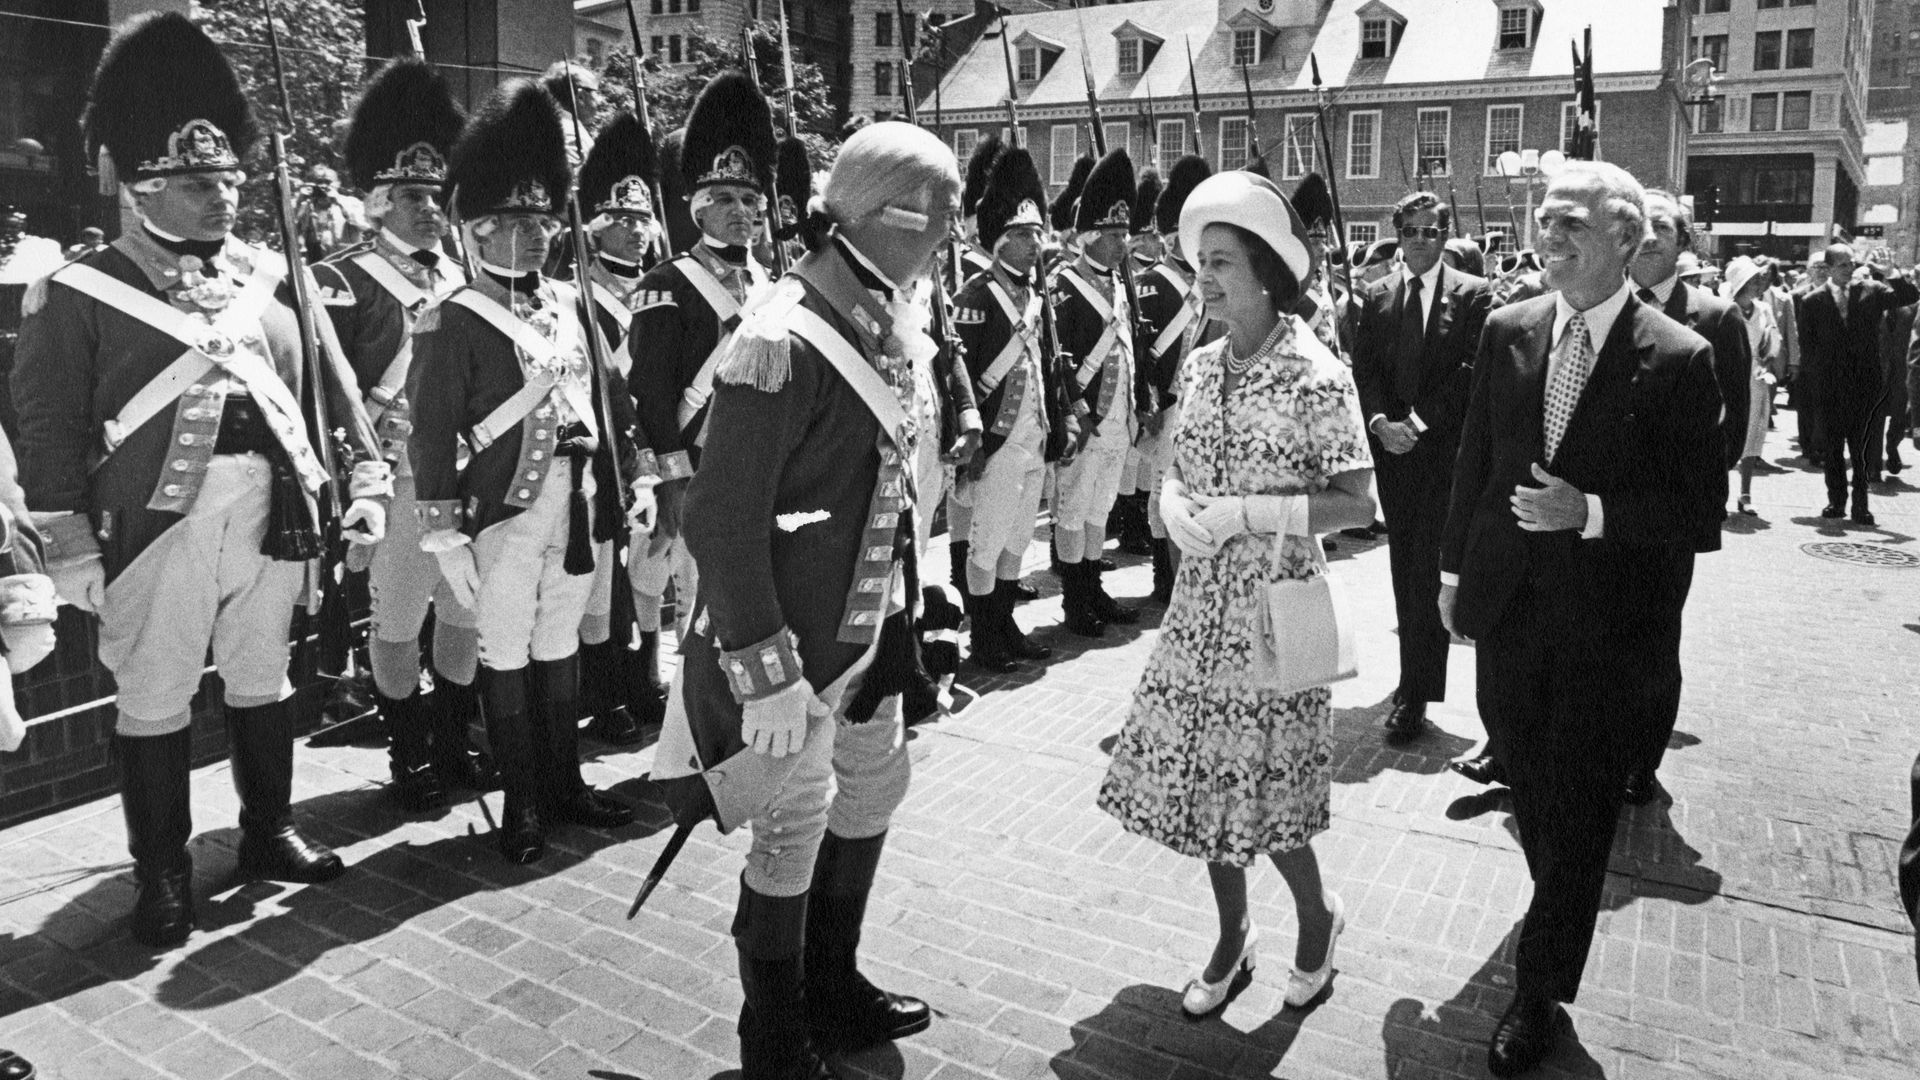 Queen Elizabeth II greets a man dressed in 18th Century British army uniform in Boston in 1976.